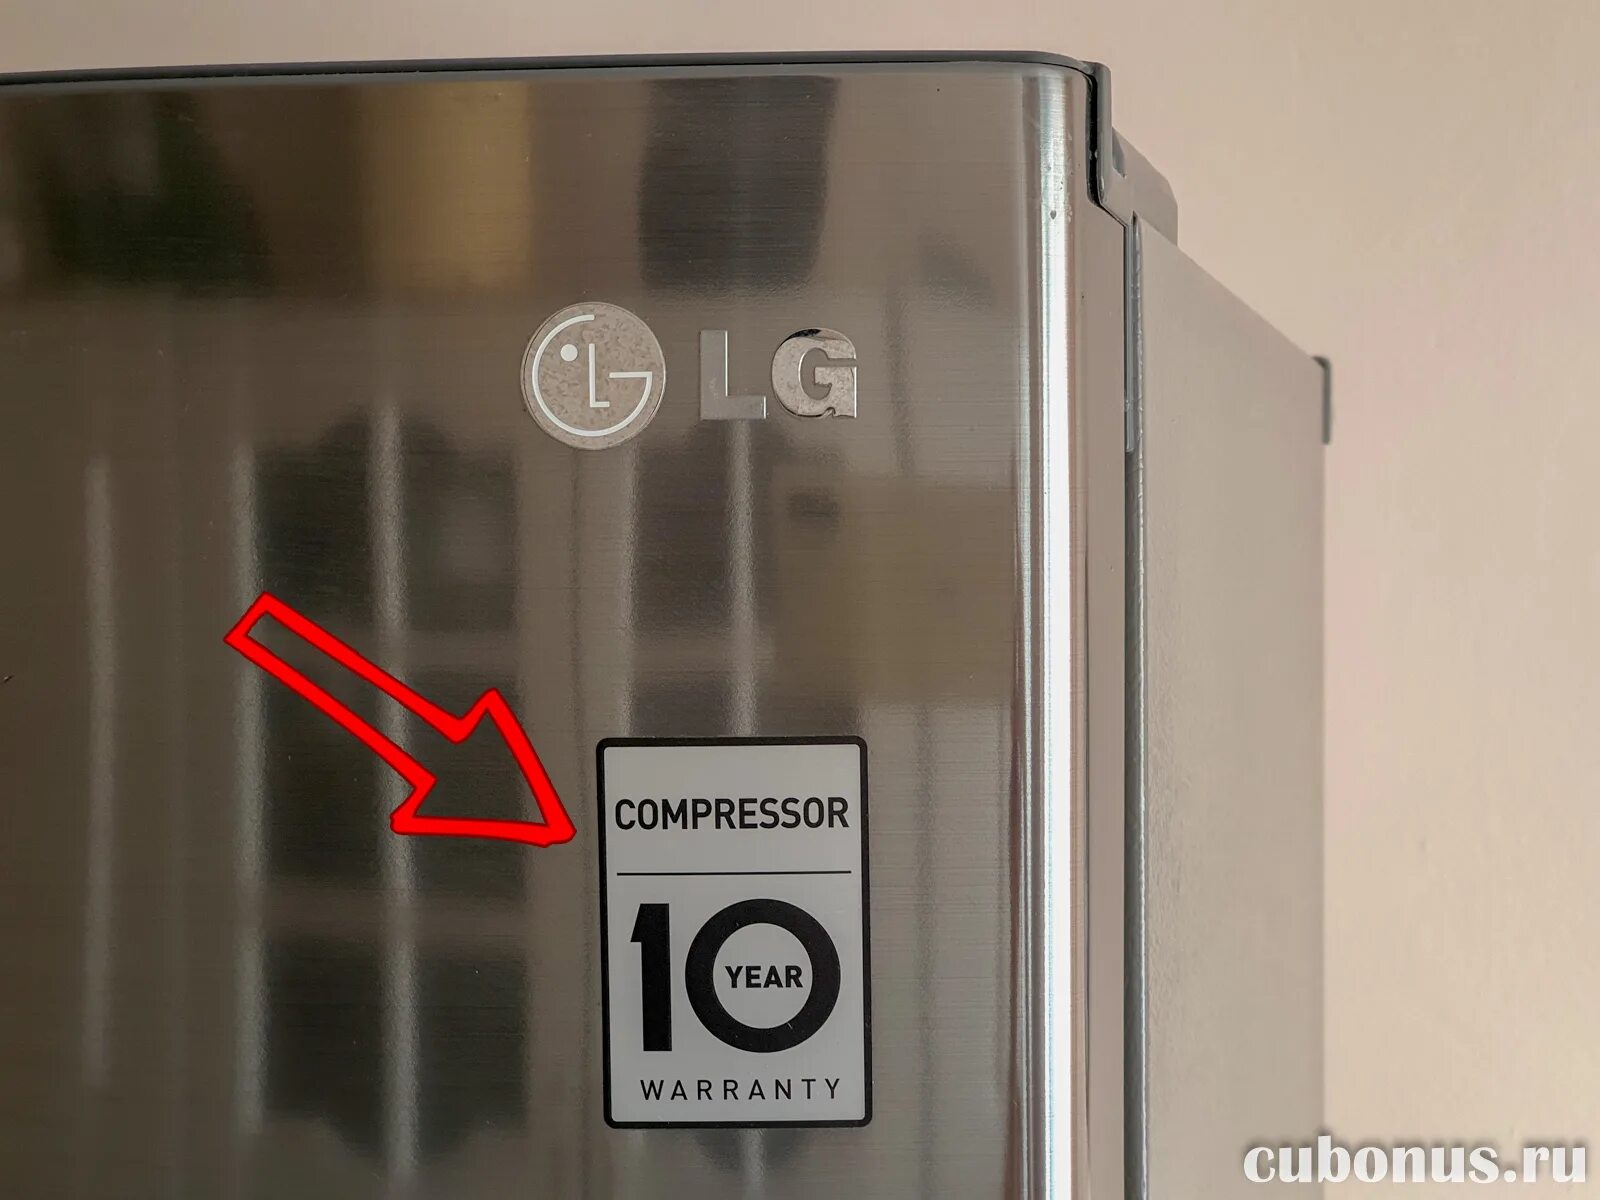 Холодильник LG задняя стенка. LG холодильник 10 лет гарантии. Ремонт холодильников LG.